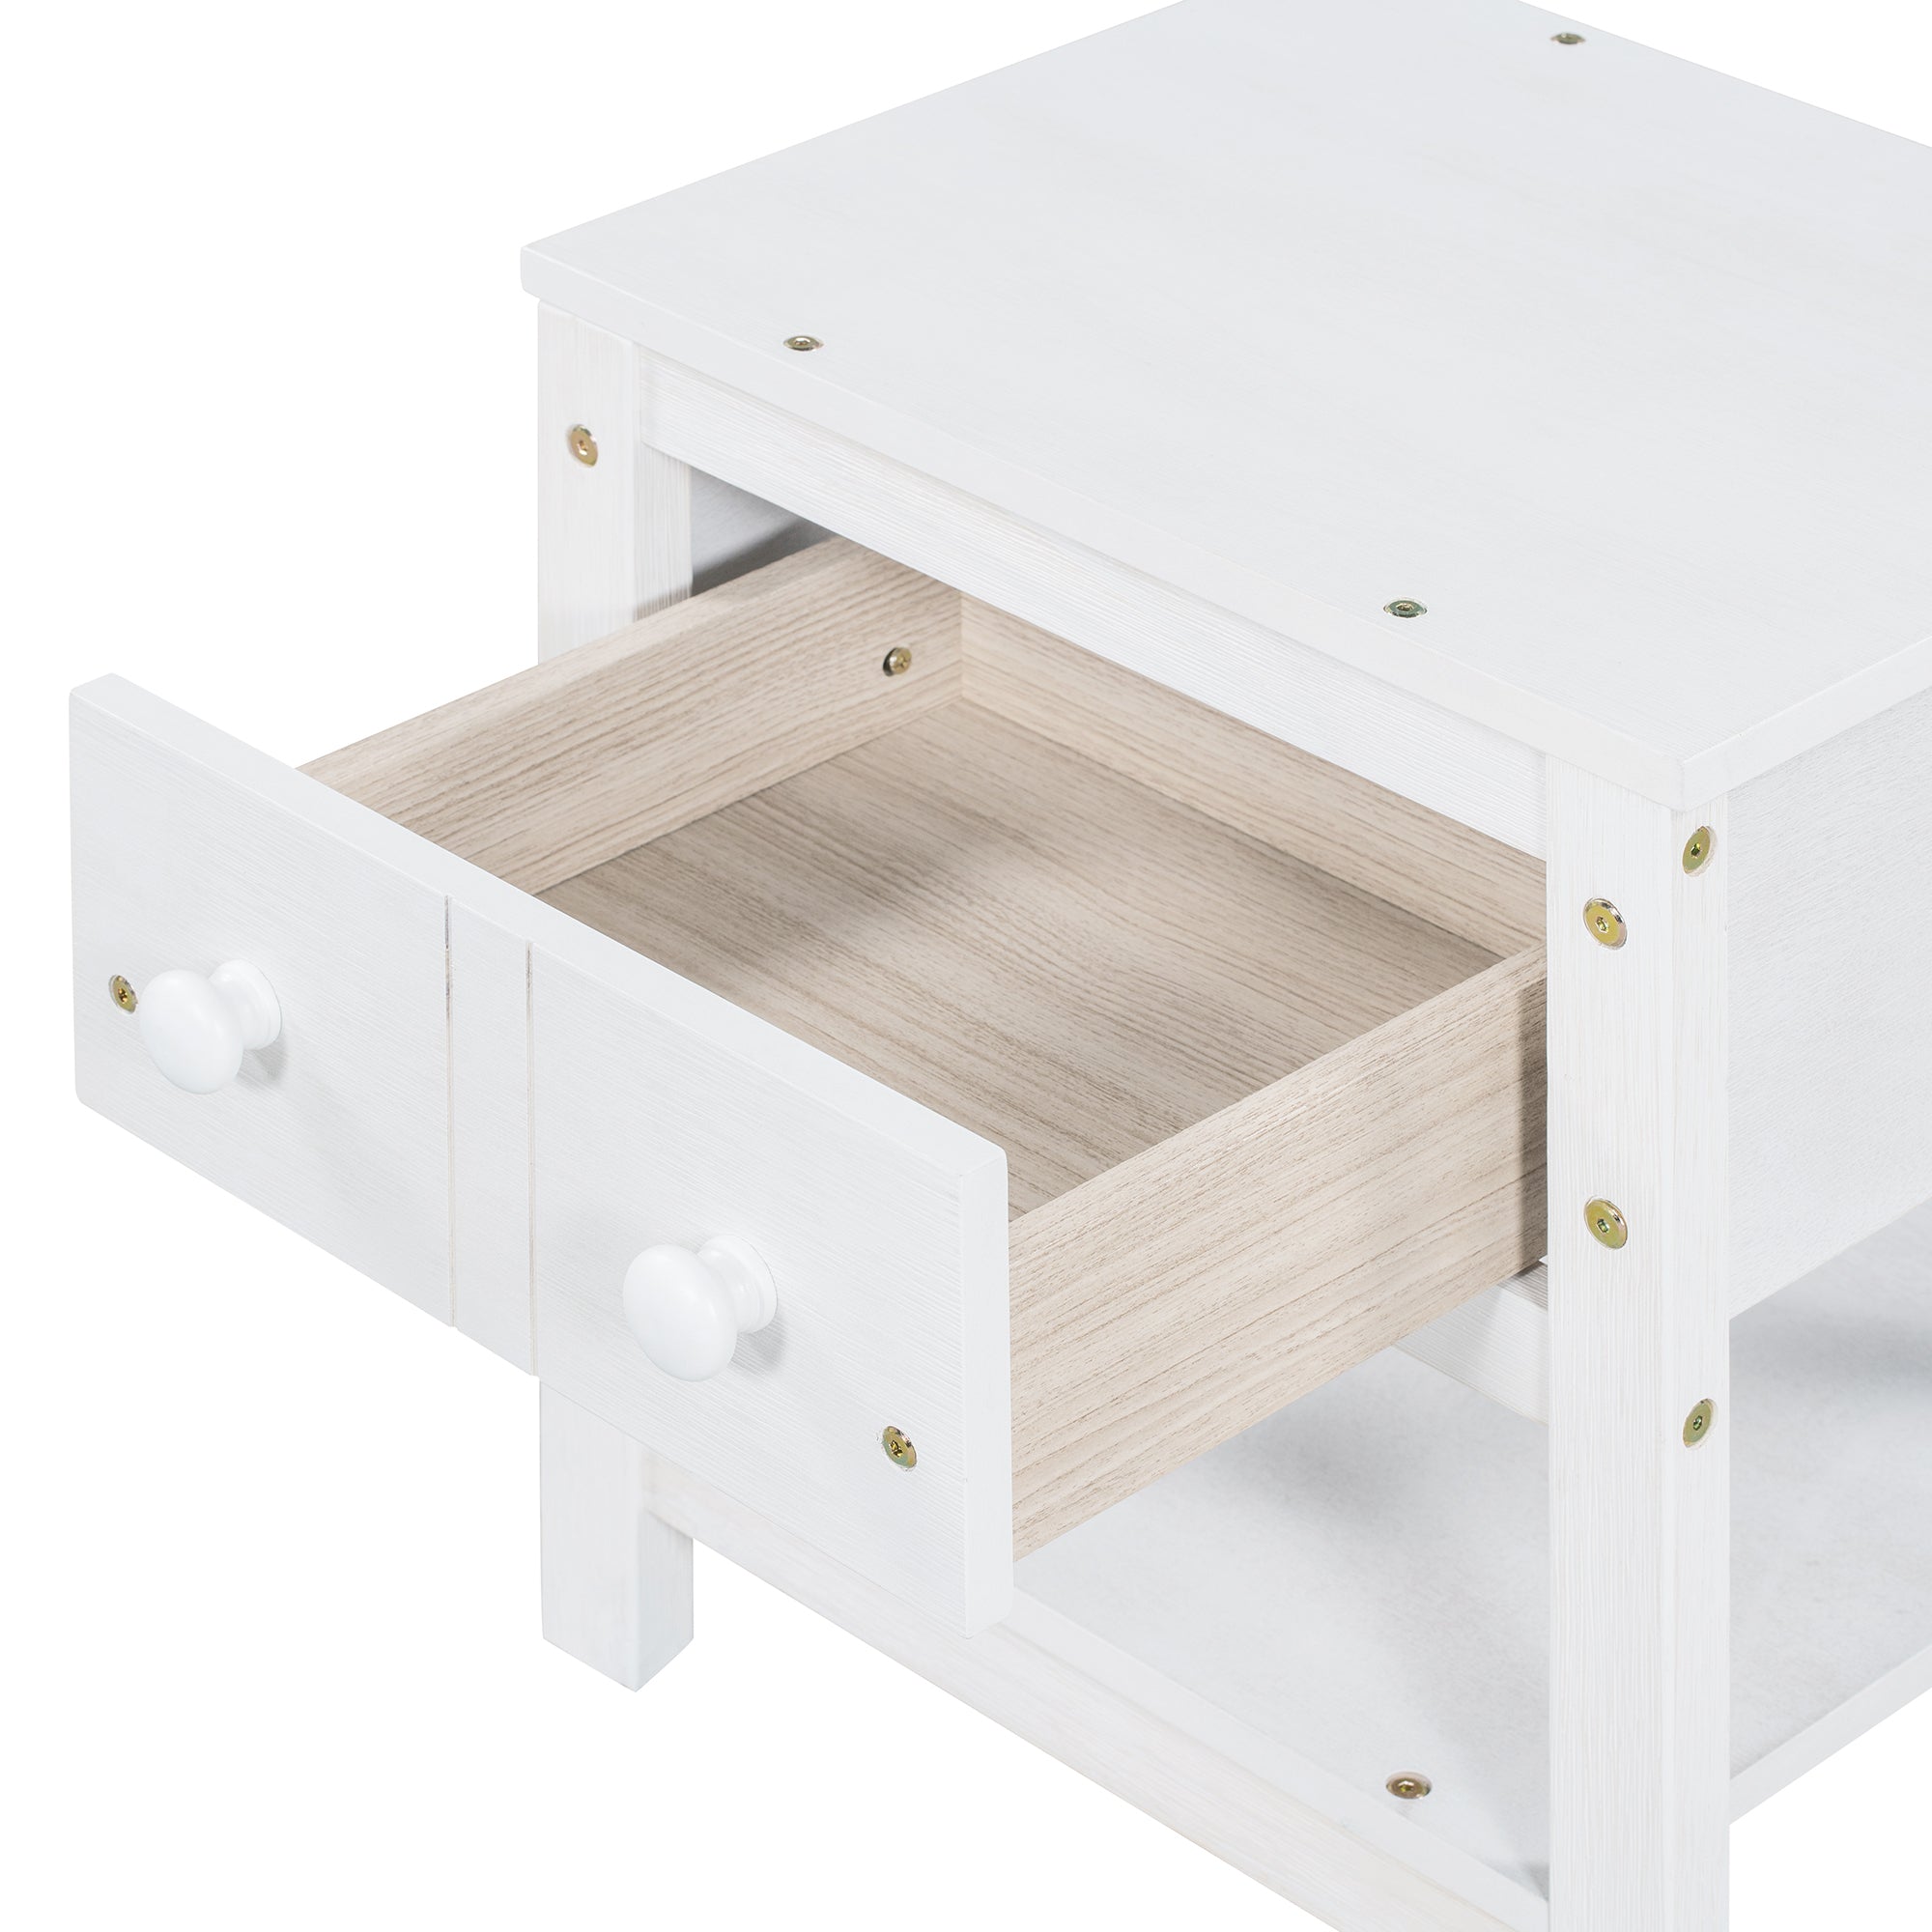 1-Drawer Wood Nightstand with Open Shelf (Set of 2)